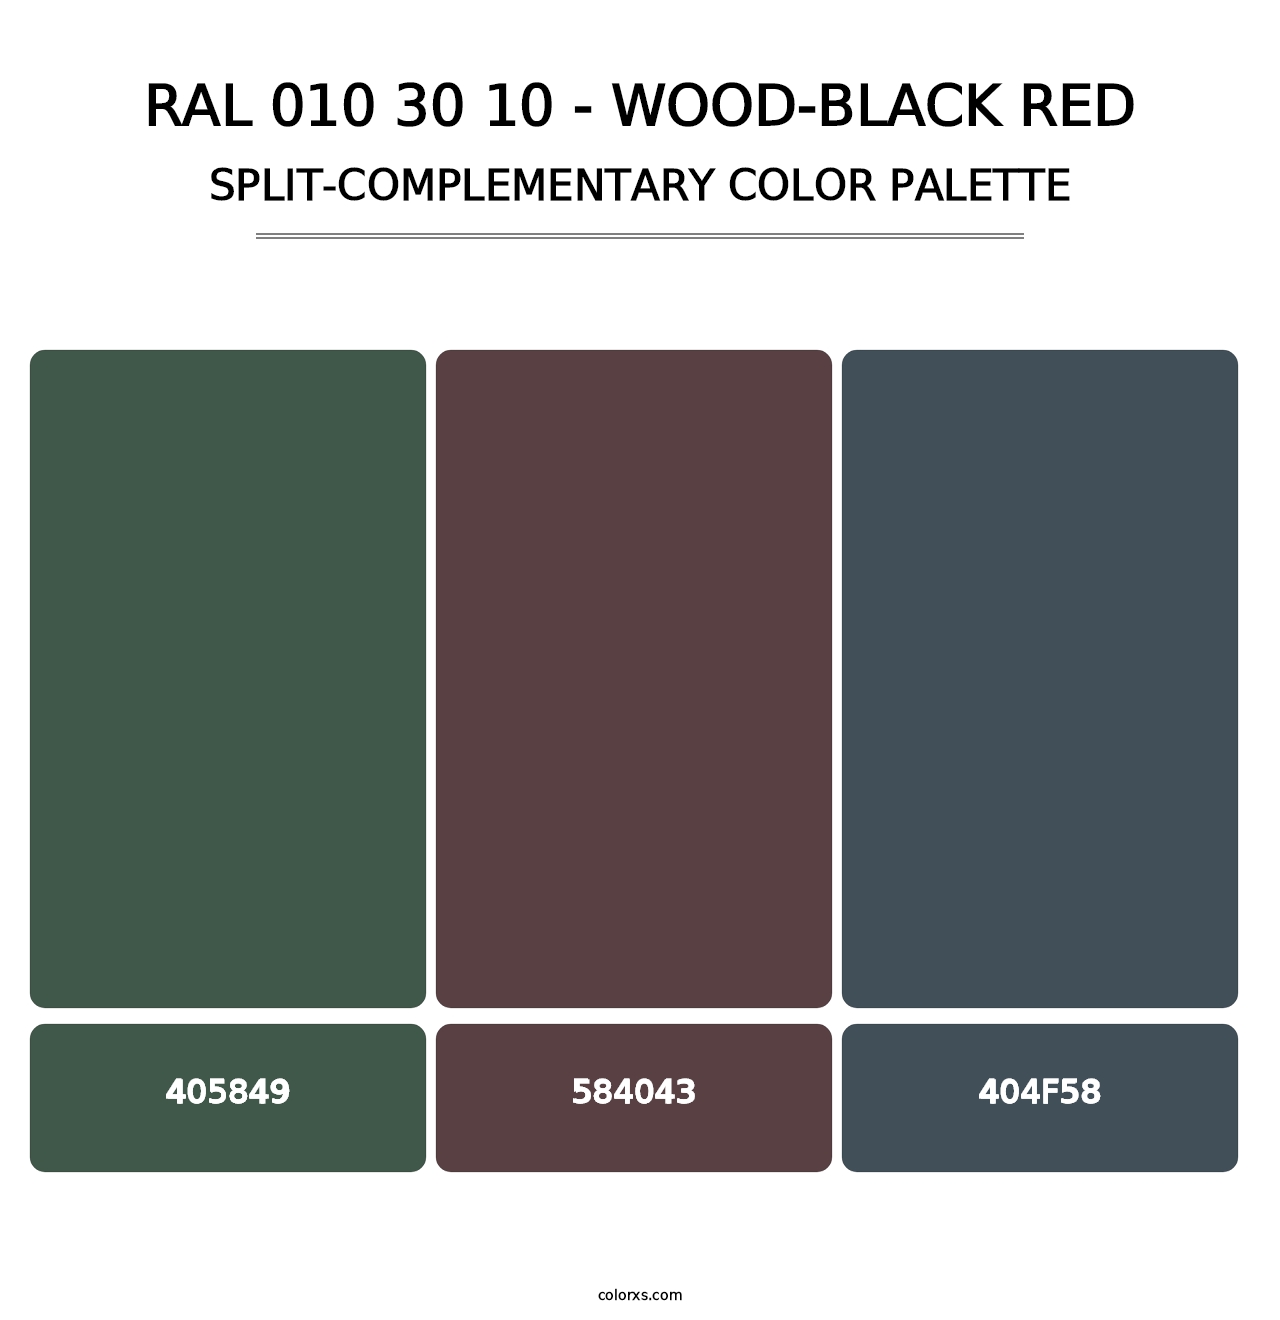 RAL 010 30 10 - Wood-Black Red - Split-Complementary Color Palette